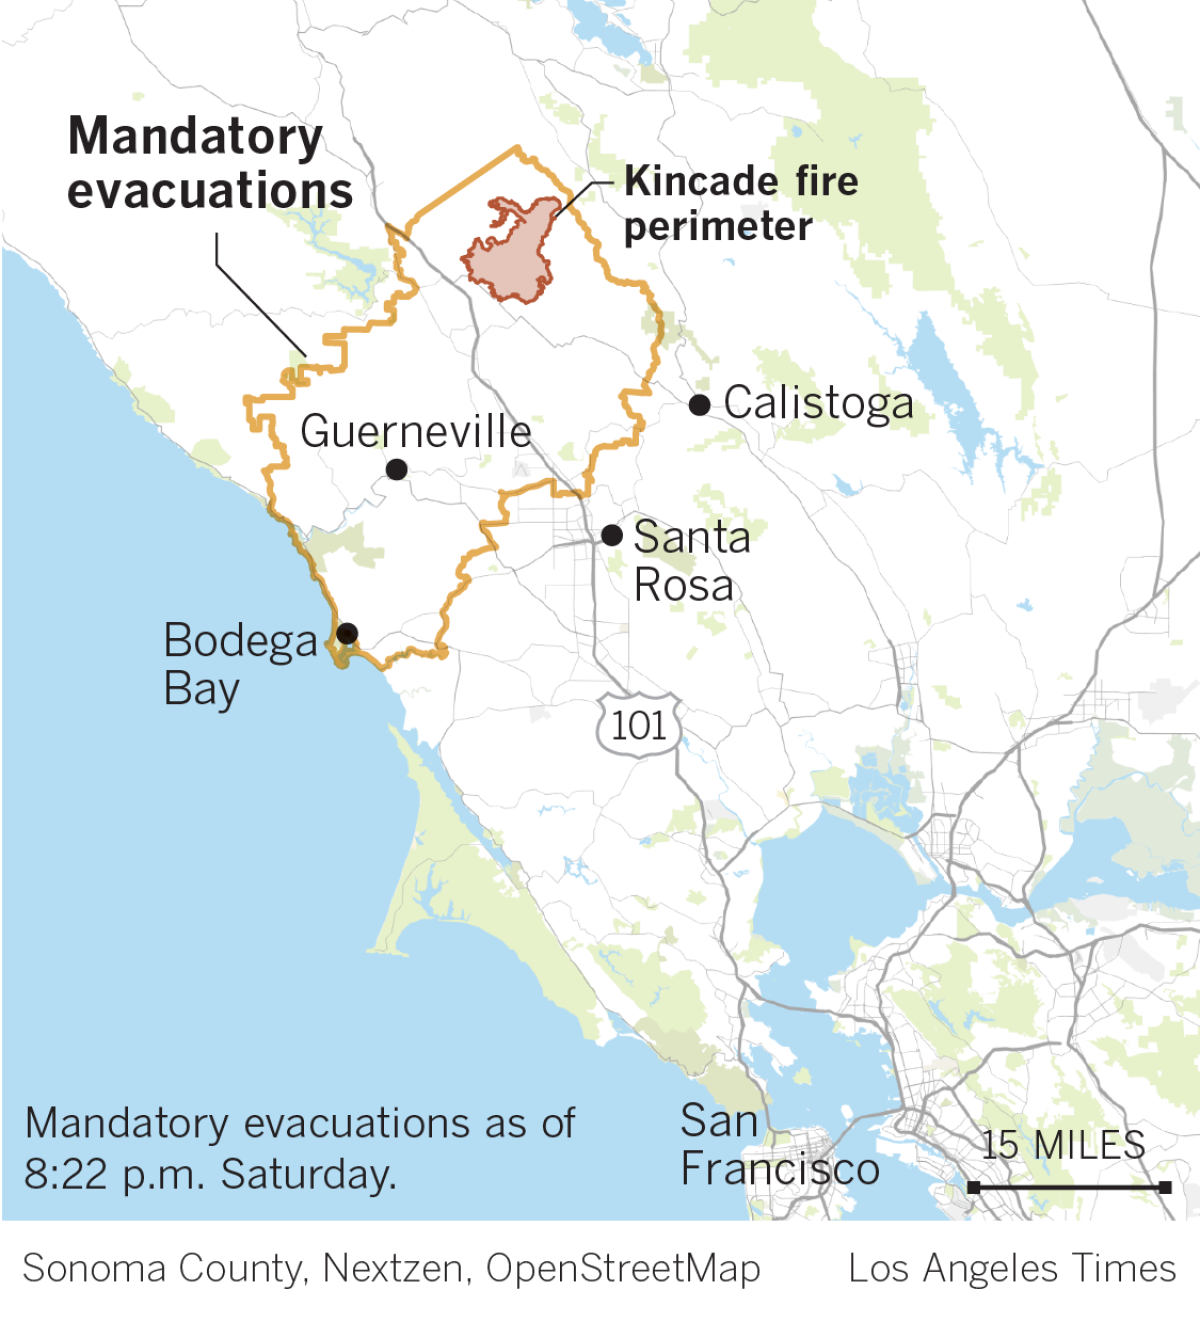 Map of mandatory evacuations near the Kincade fire in California as of 8:22 p.m., Saturday.